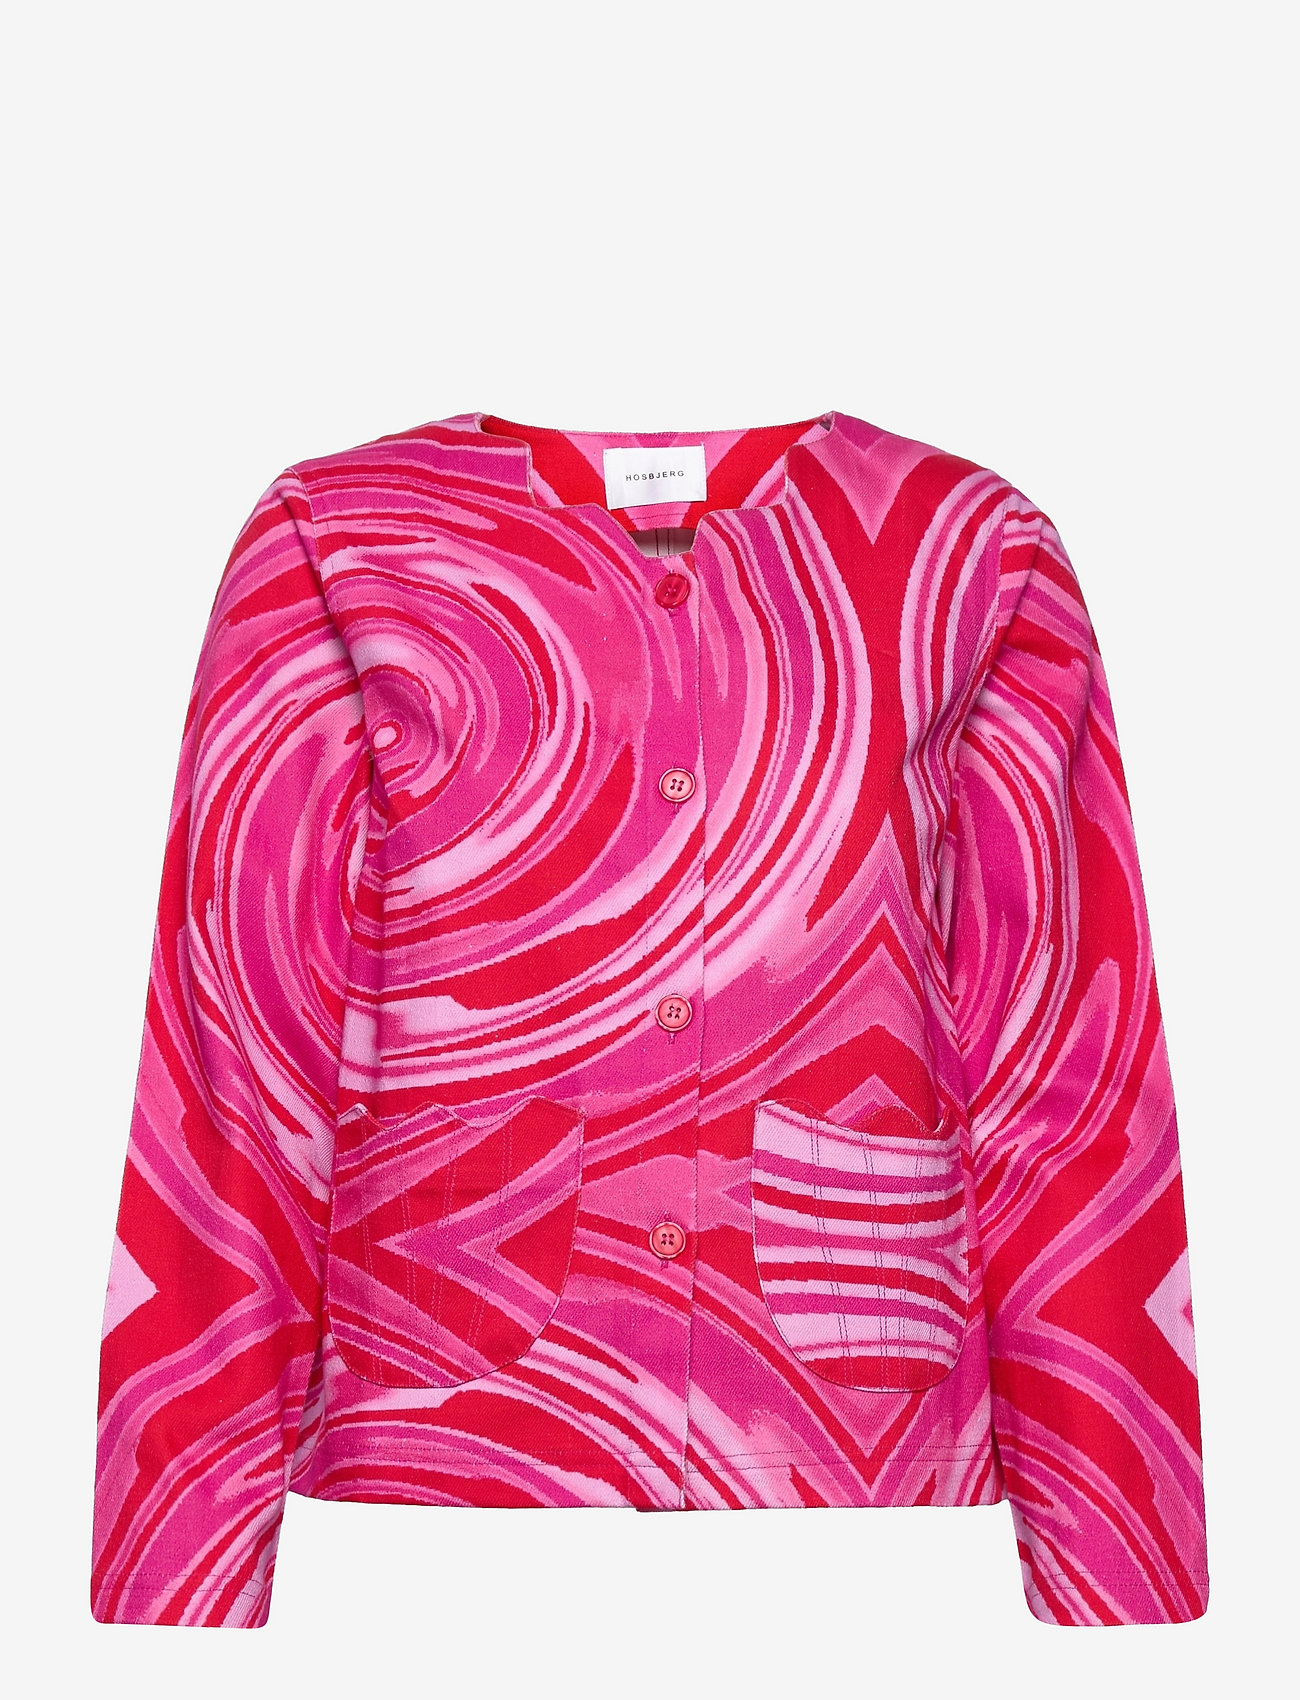 Hosbjerg - Frama Shirt - damen - swirl pink - 0